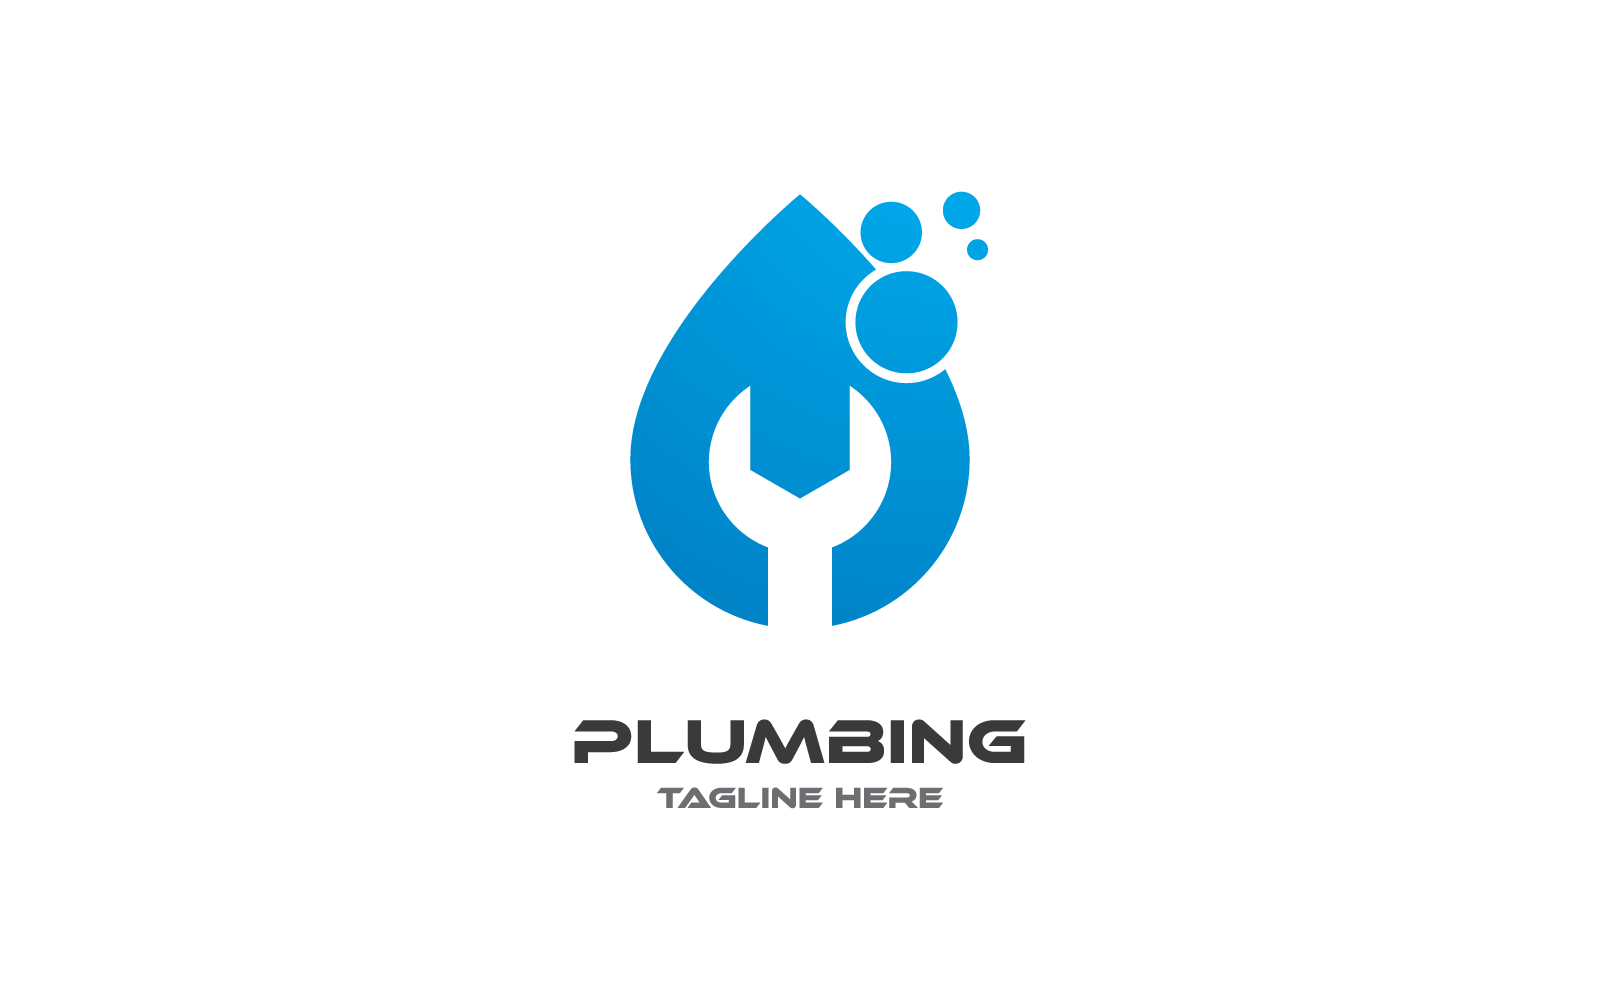 Plumbing logo vector flat design business template